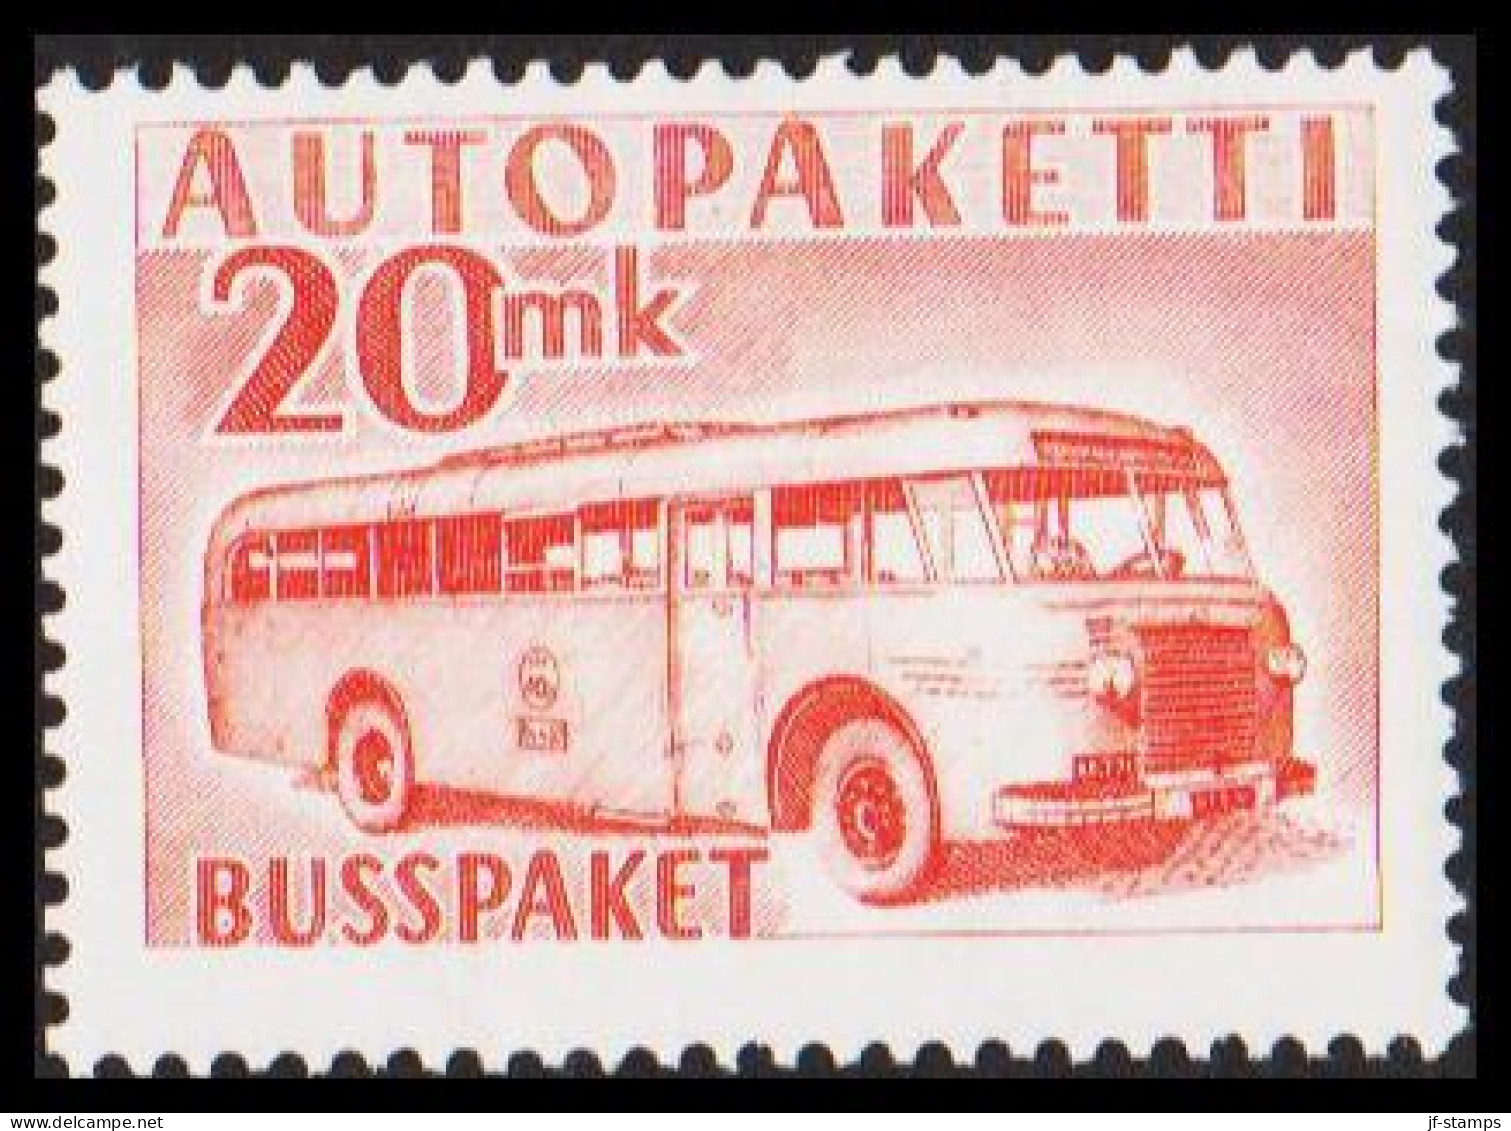 1952-1958. FINLAND. Mail Bus. 20 Mk. AUTOPAKETTI - BUSSPAKET Never Hinged. (Michel AP 7) - JF534382 - Pakjes Per Postbus